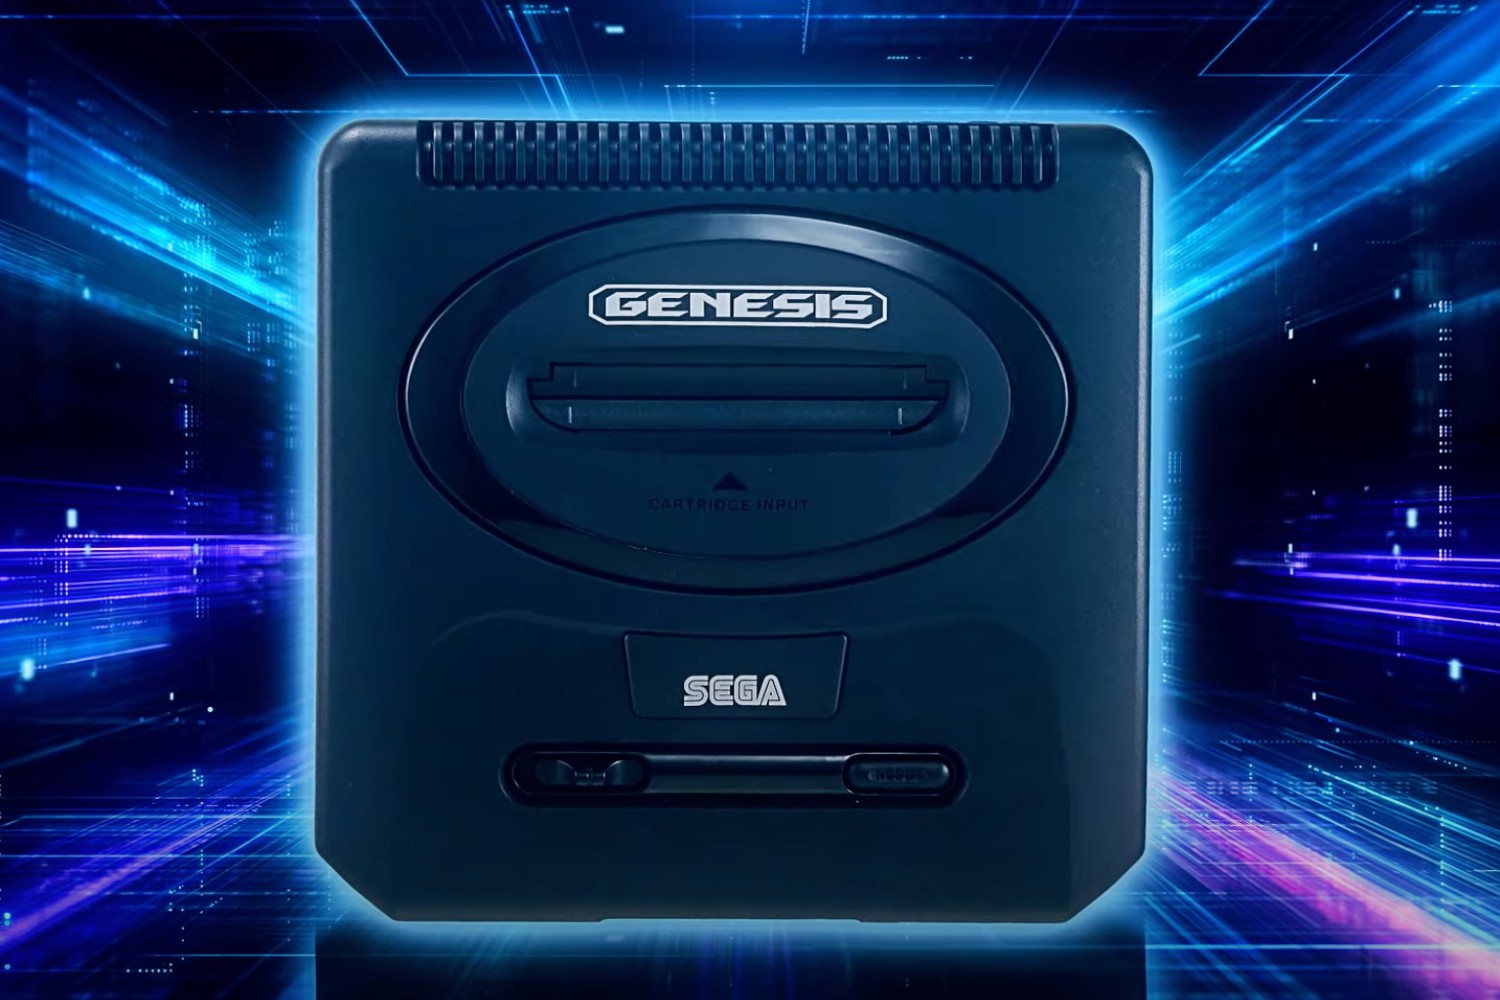 The Sega Genesis Mini 2 features an unreleased game by Sonic
legend Takashi Iizuka